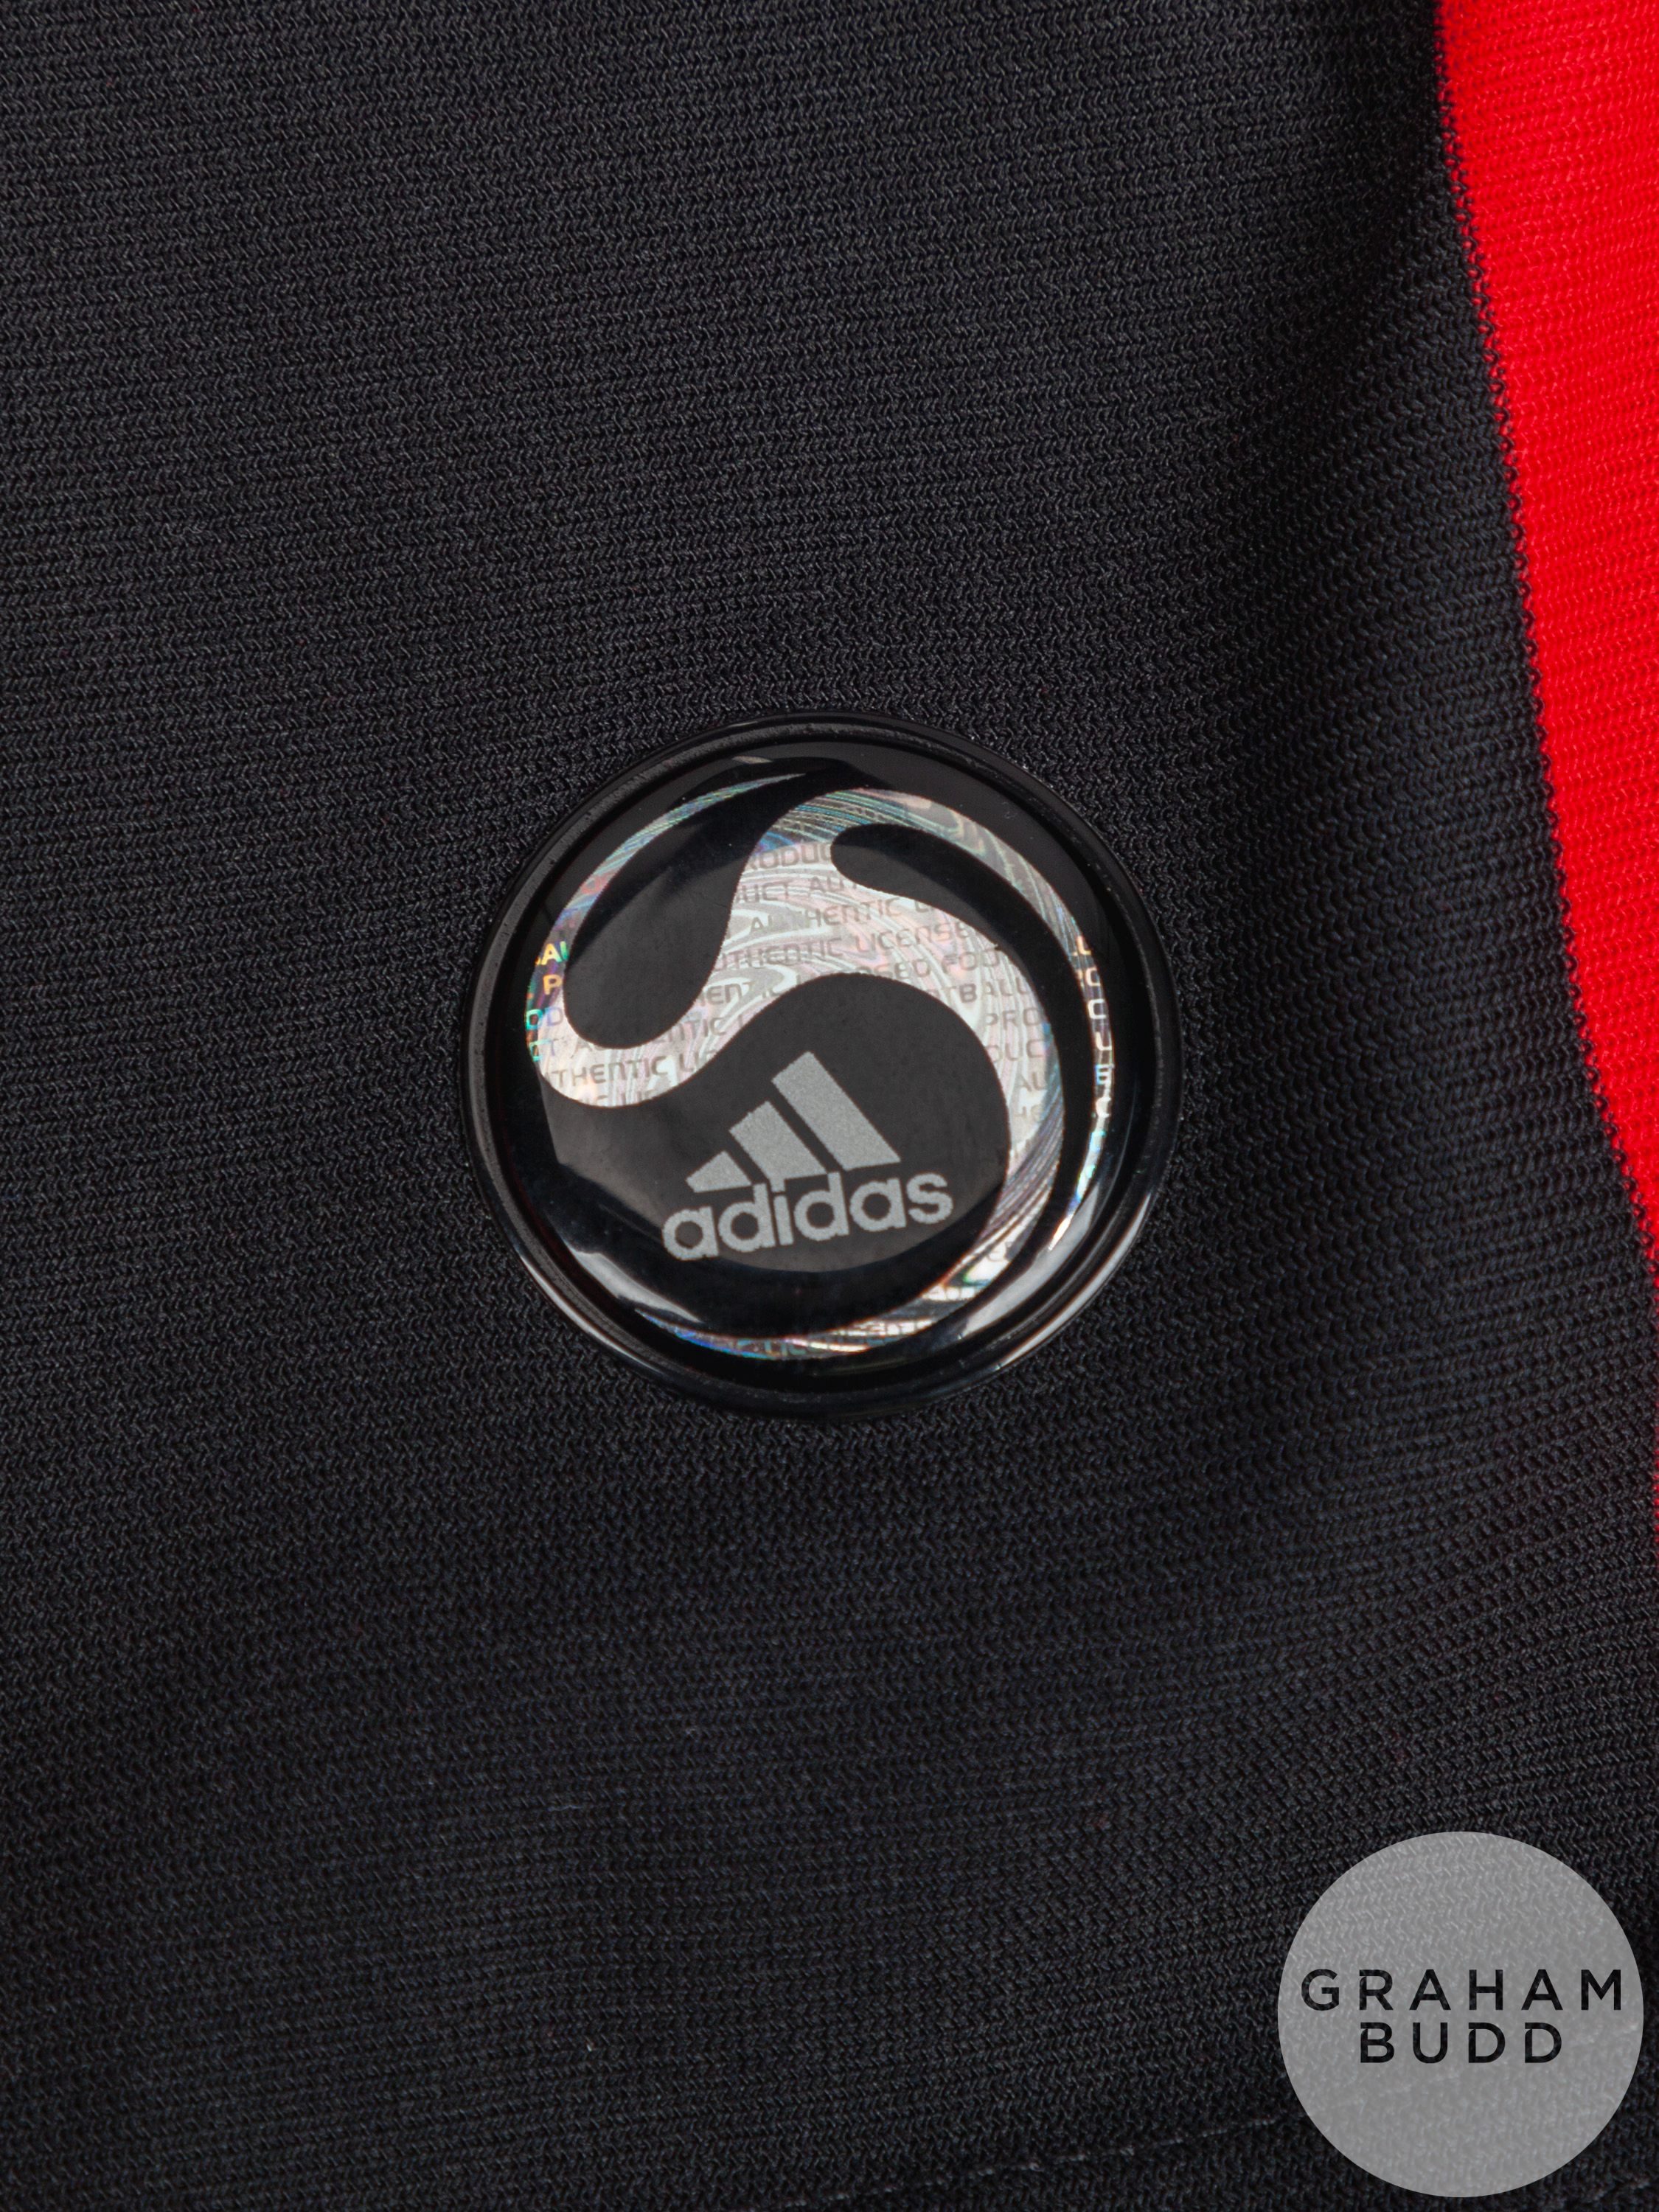 Gennaro Gattuso red and black No.8 AC Milan short-sleeved shirt, 2008-09, - Image 4 of 6